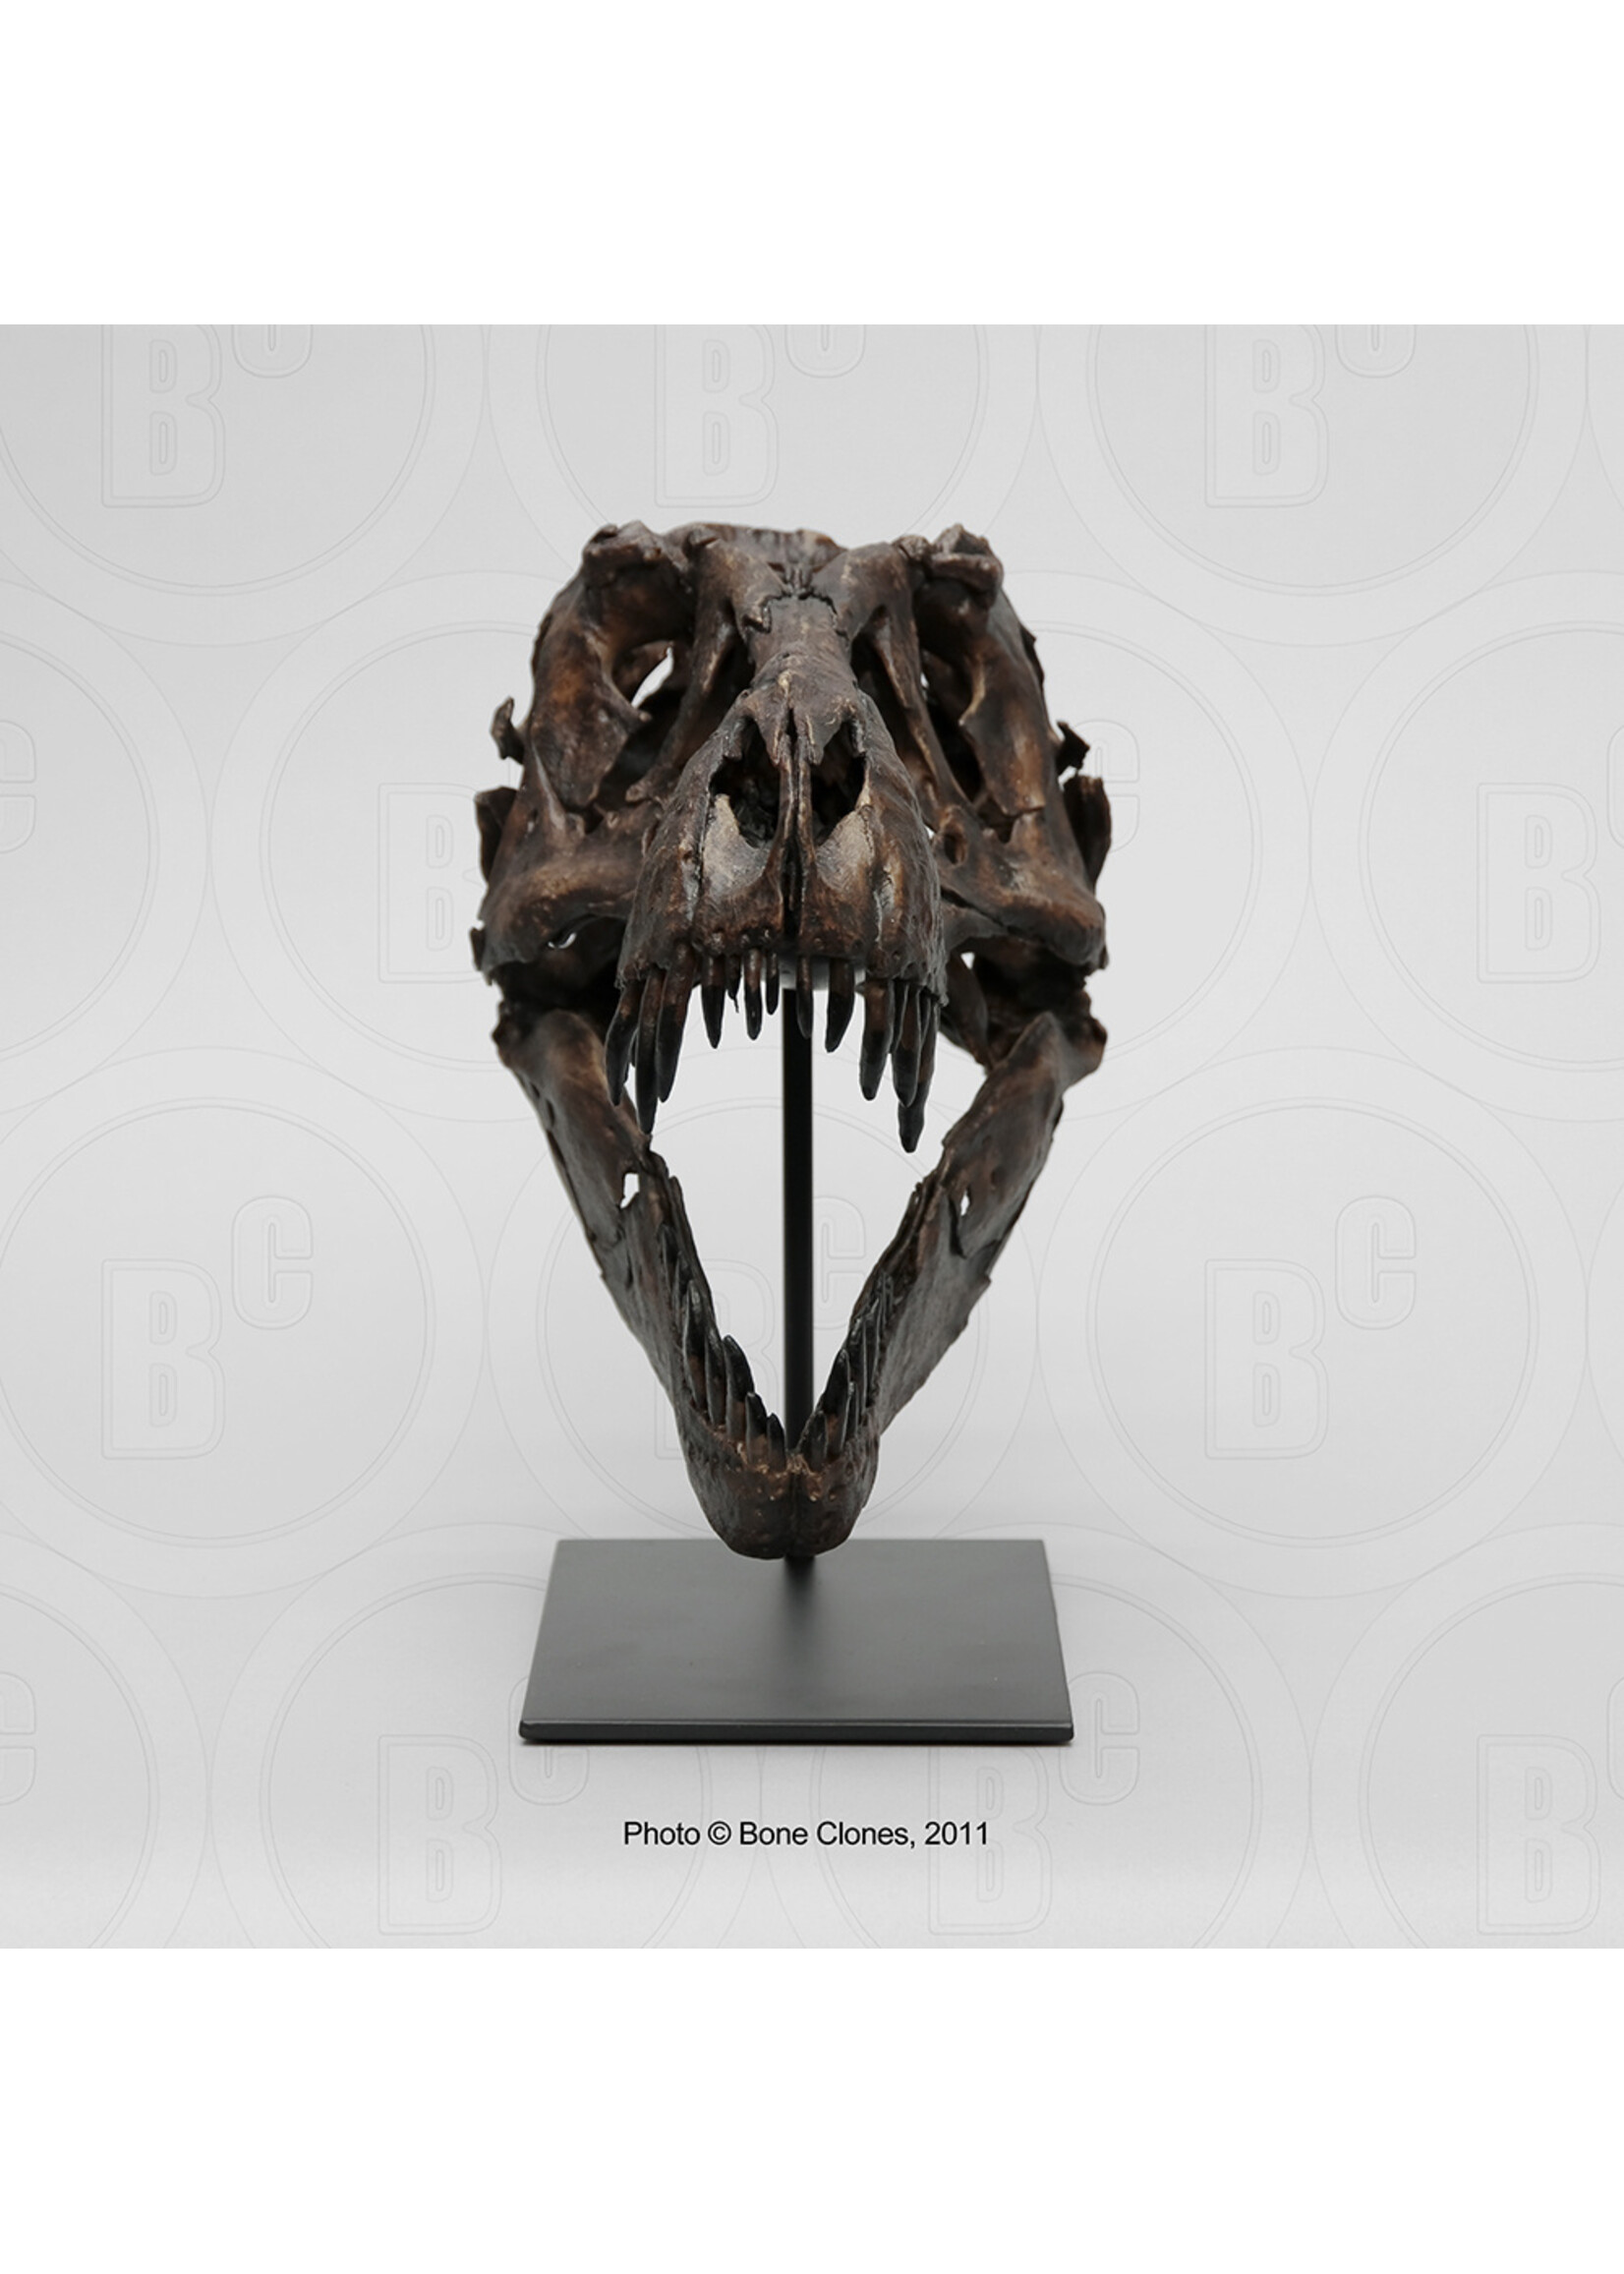 STAN Tyrannosaurus rex ® - 1/6 Scale Skull Rapid Prototype - Fossil Replica (BHI #127301) - Replicas/Models